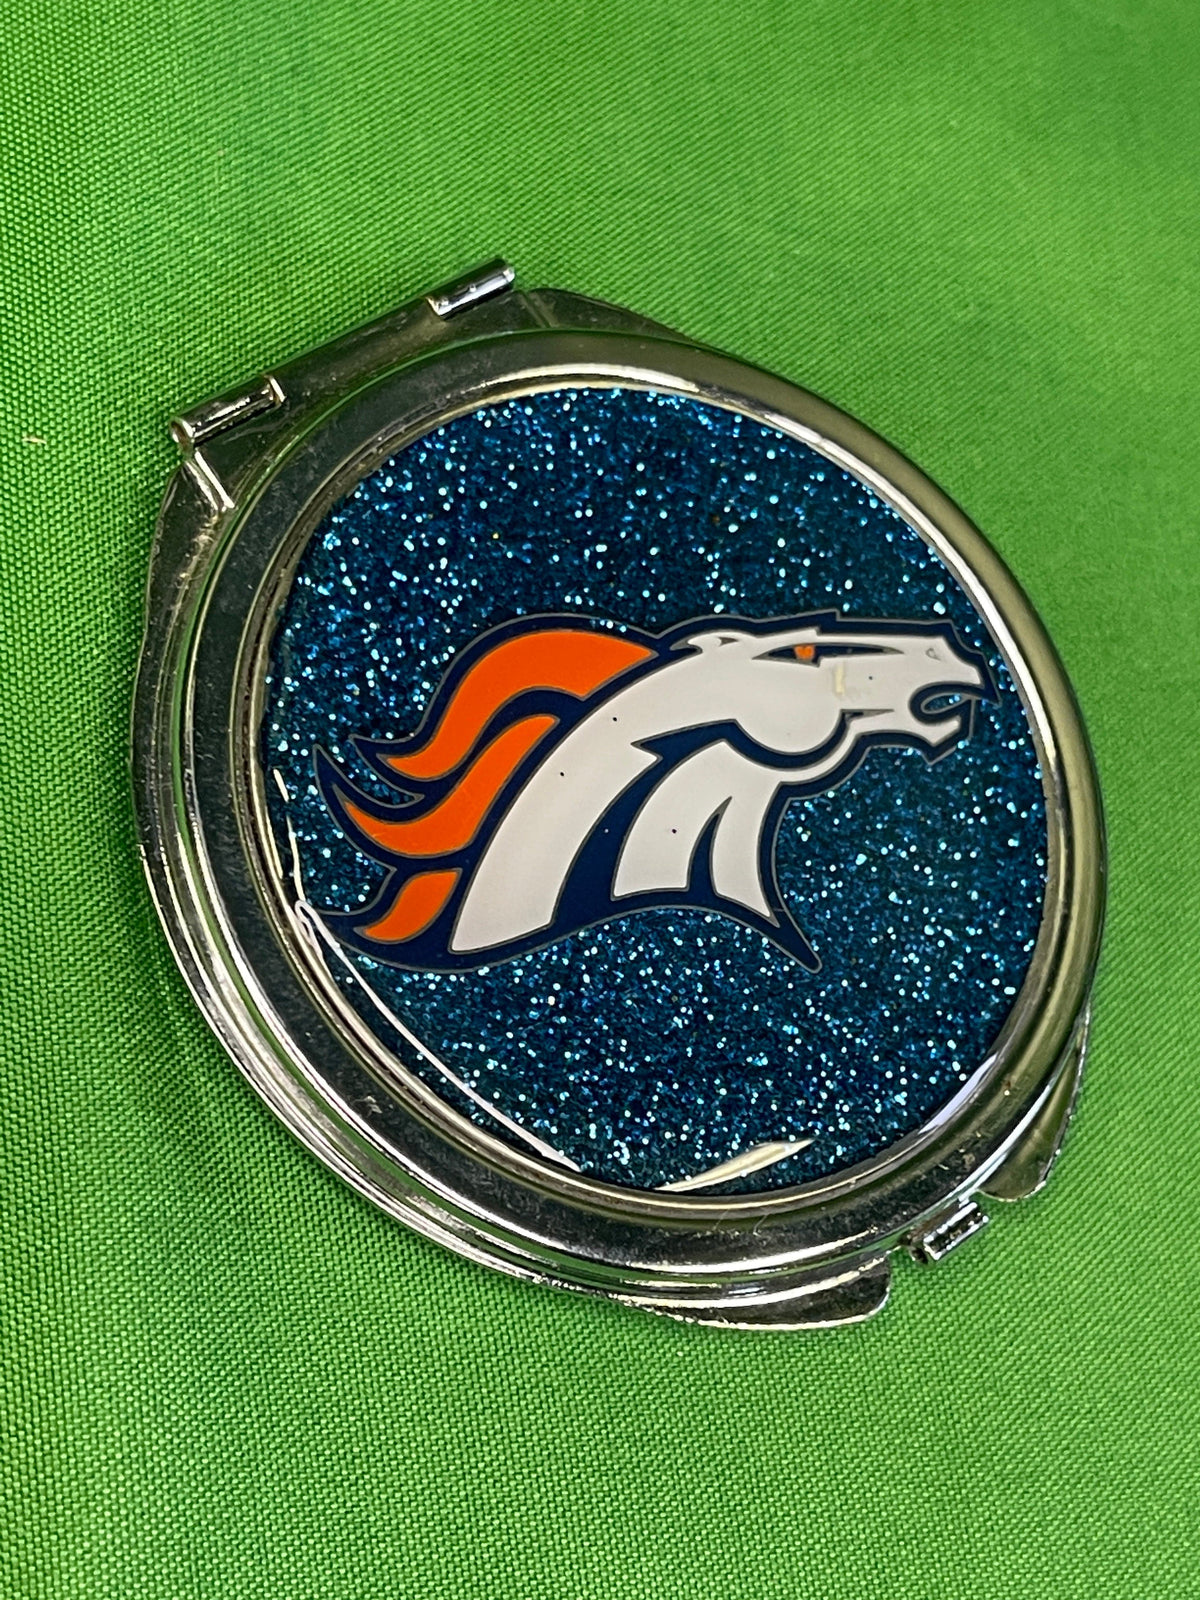 NFL Denver Broncos Glittery Silver Compact Mirror